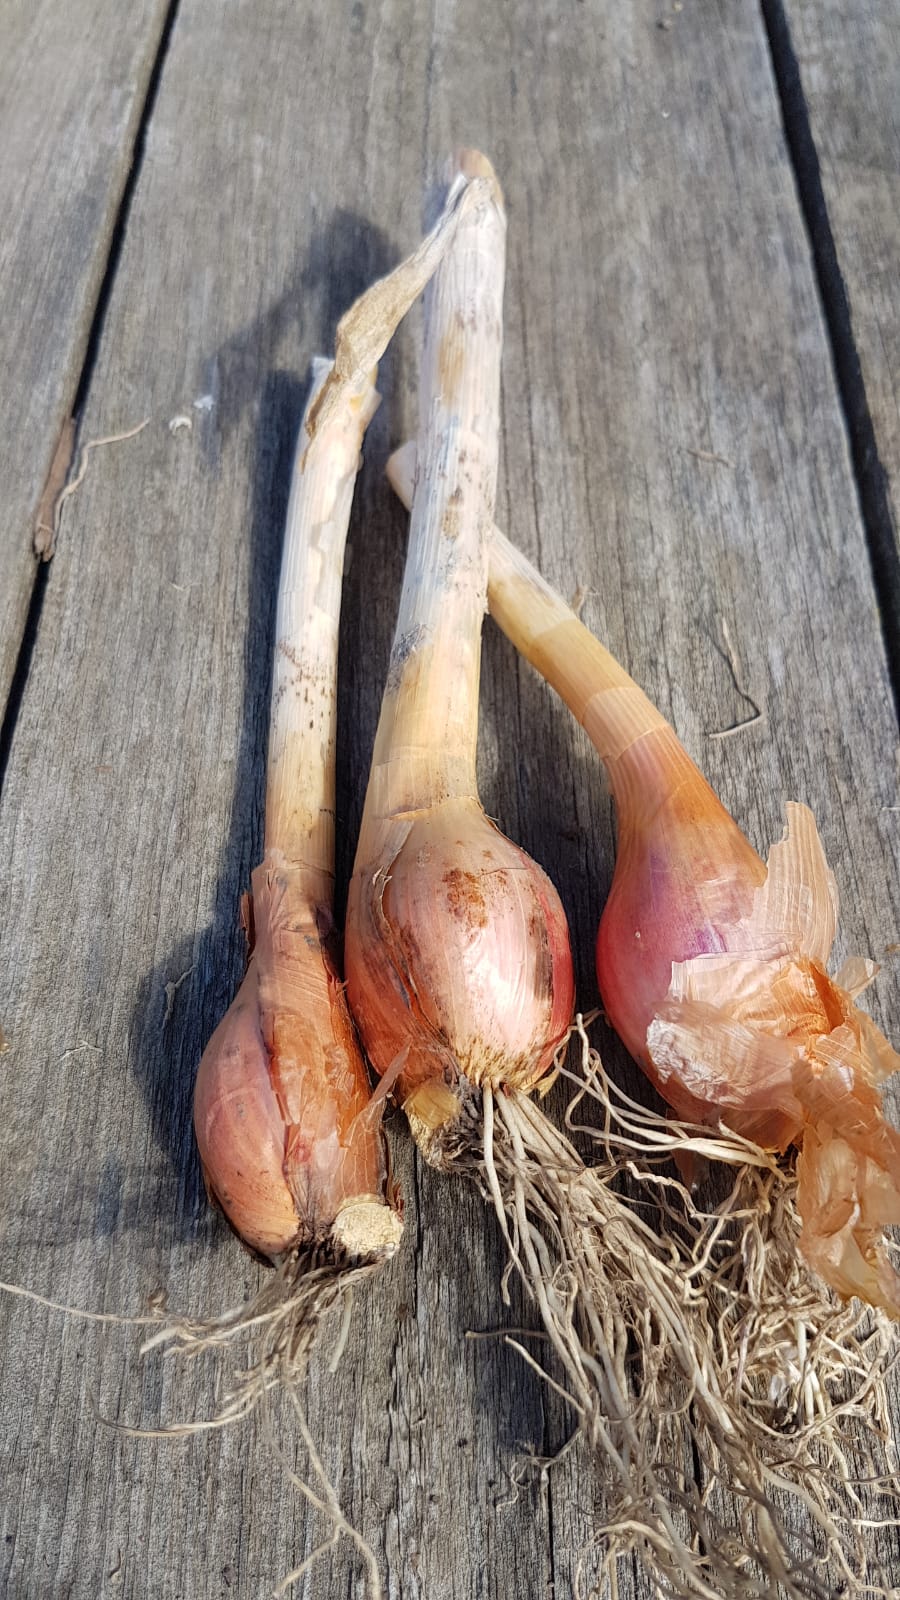 Egyptian Walking Onion, Allium x Proliferum ($5 for 4 bulbils)